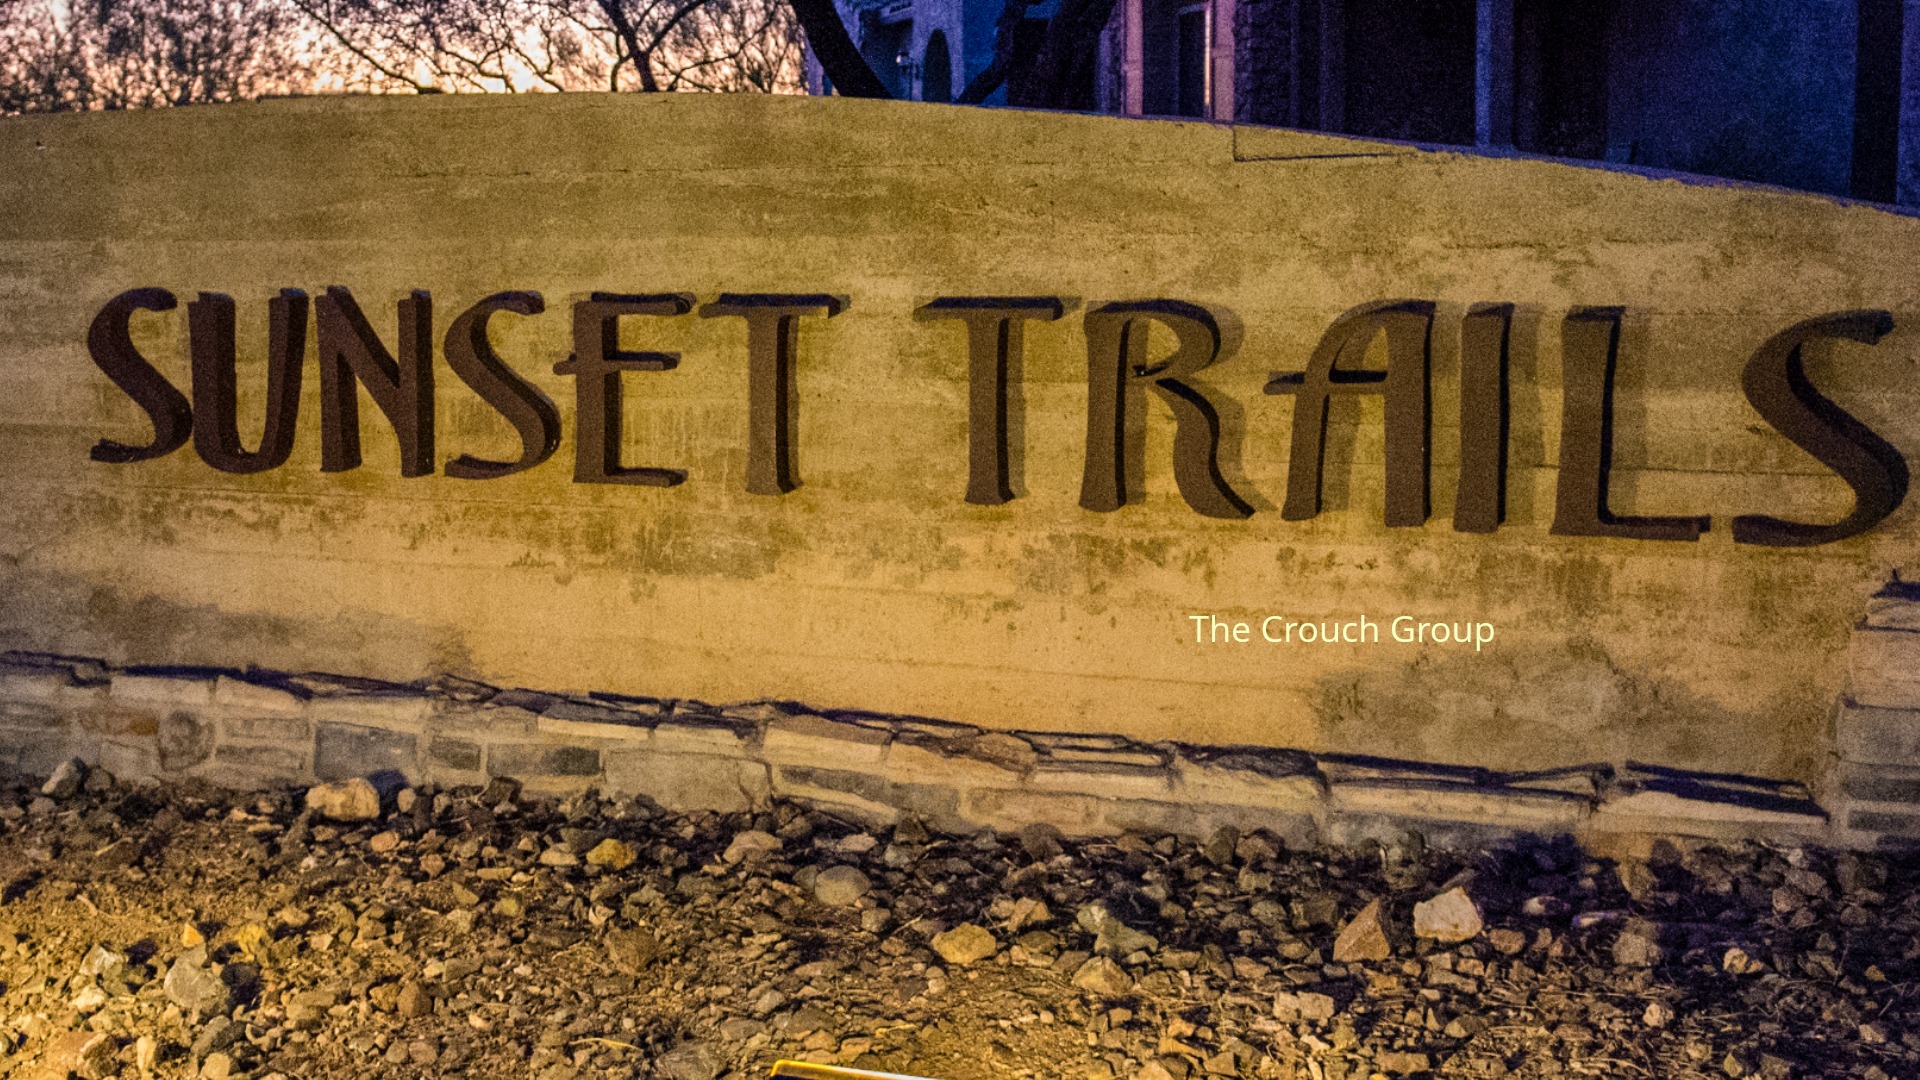  Sunset Trails entrance sign for homes Fireside Norterra